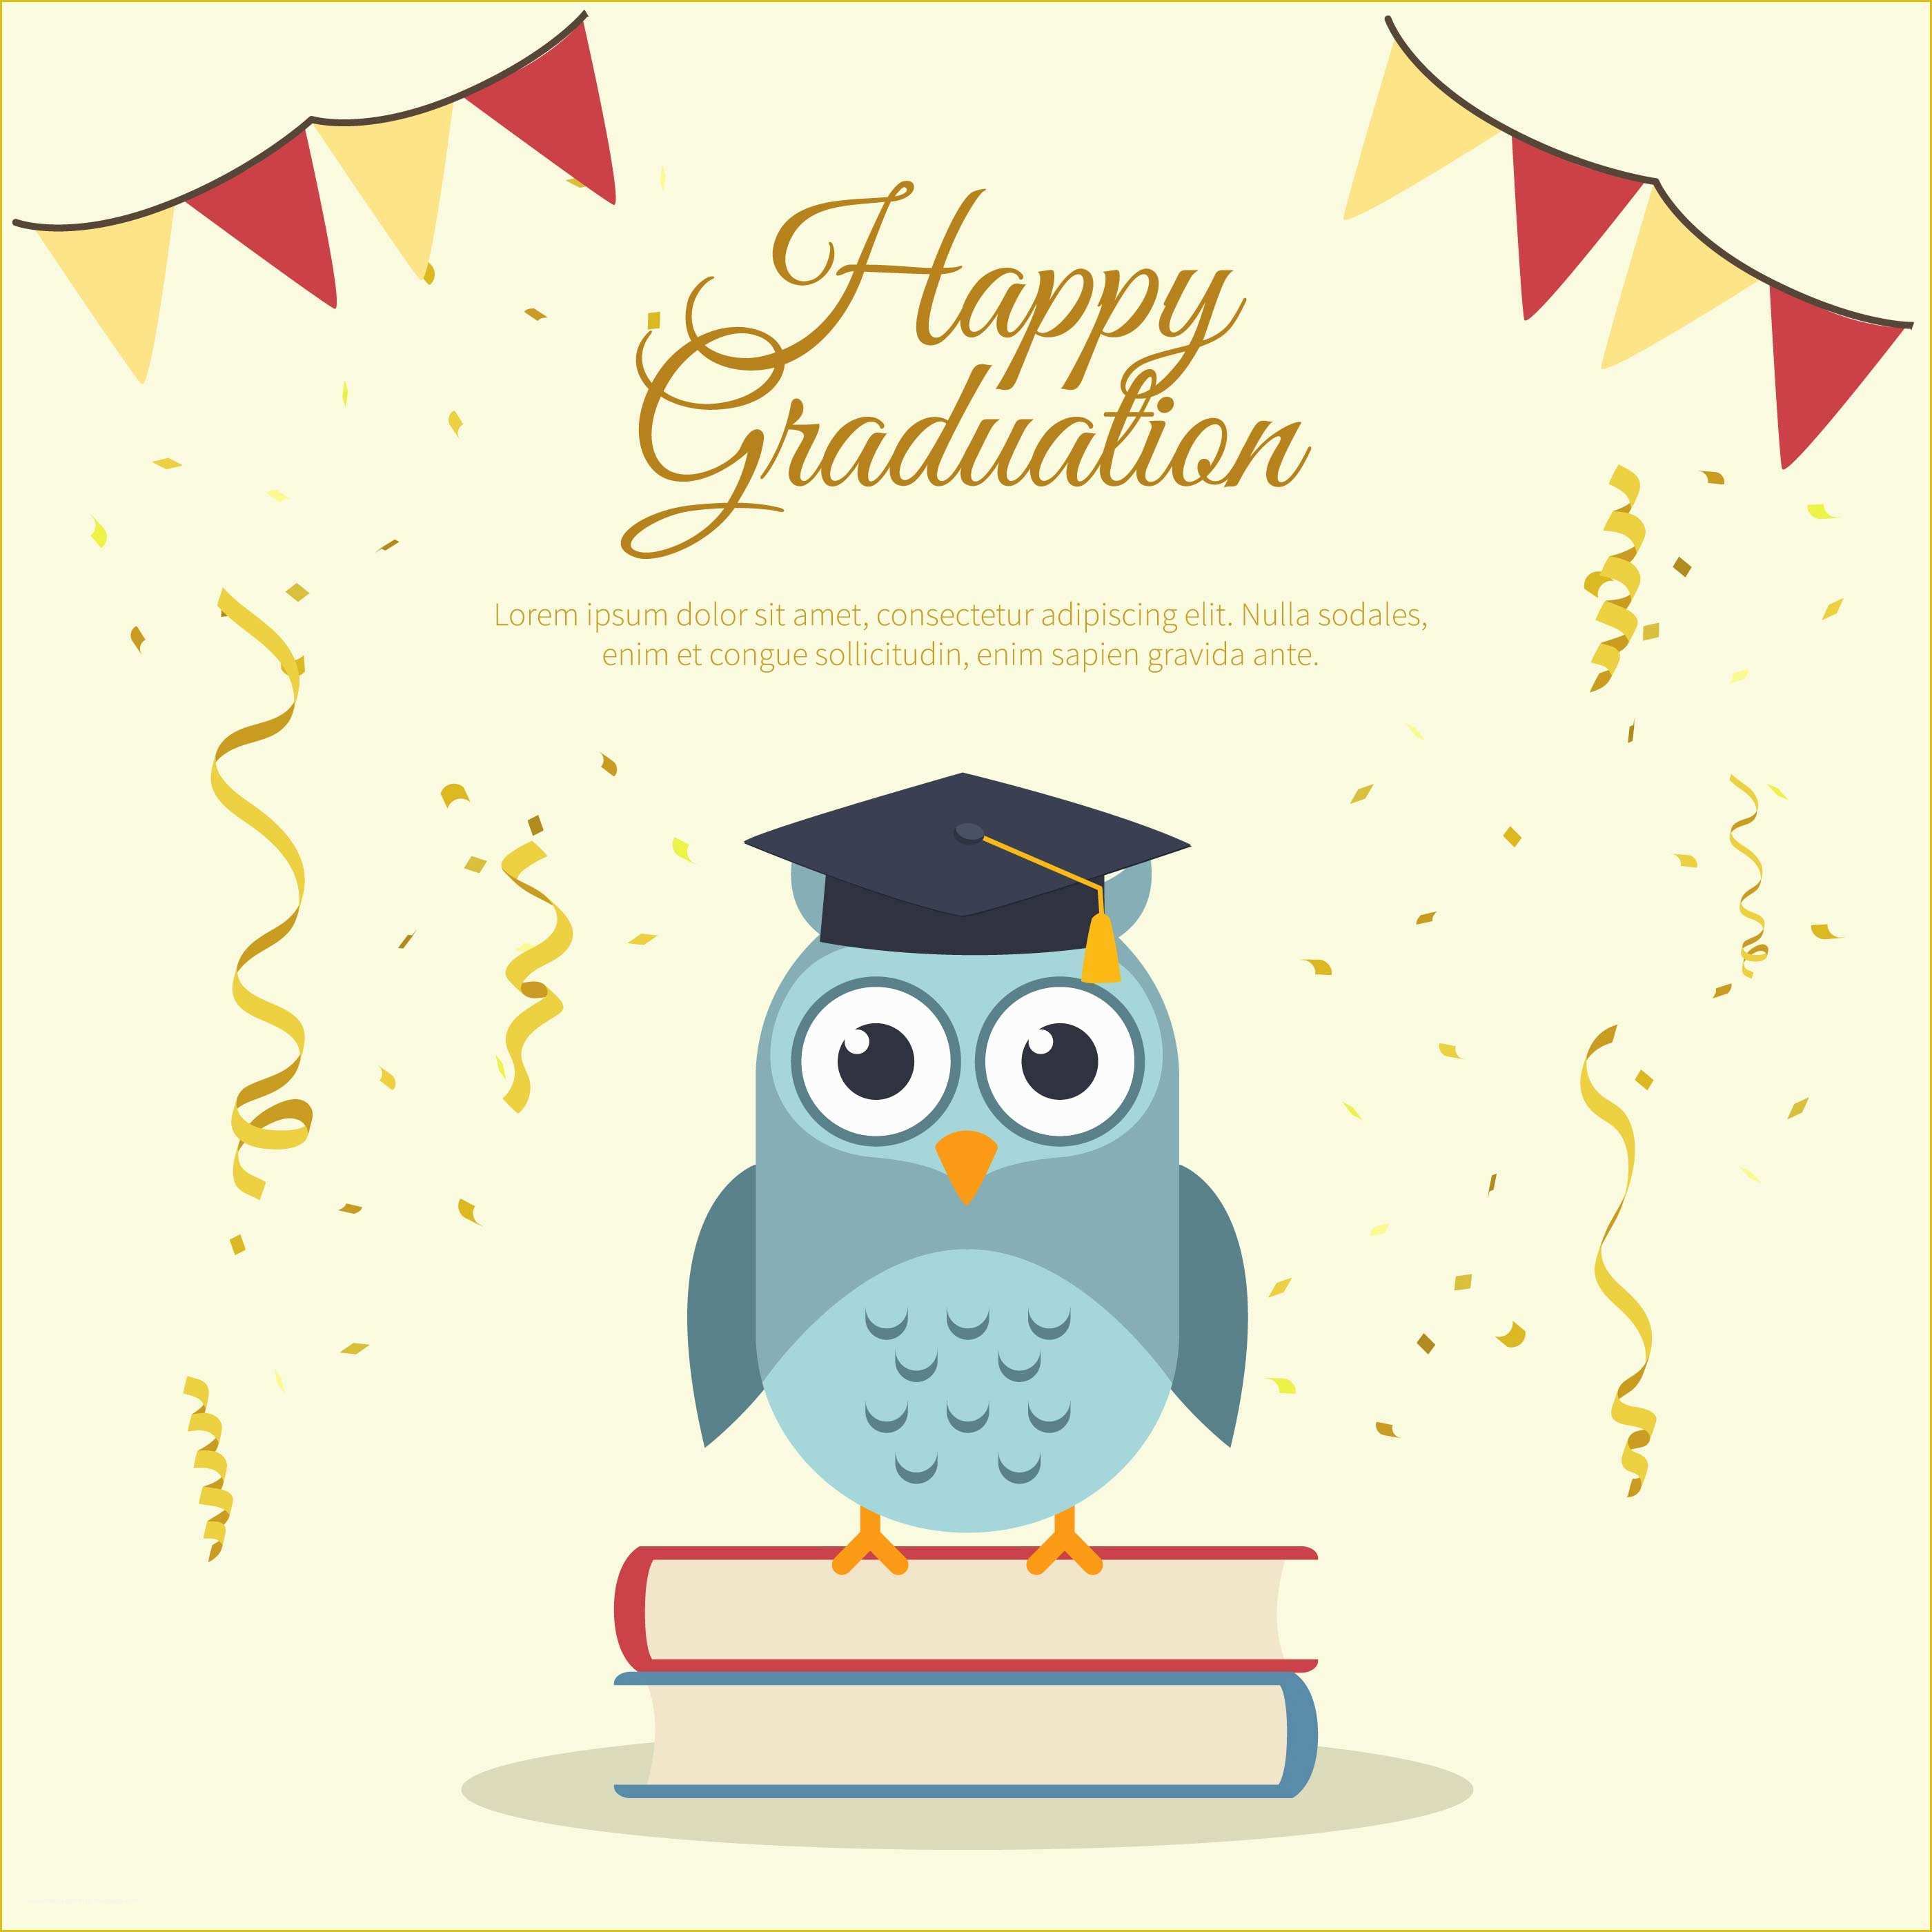 Graduation Invitation Card Template Free Download Of Happy Graduation Card Template Download Free Vector Art